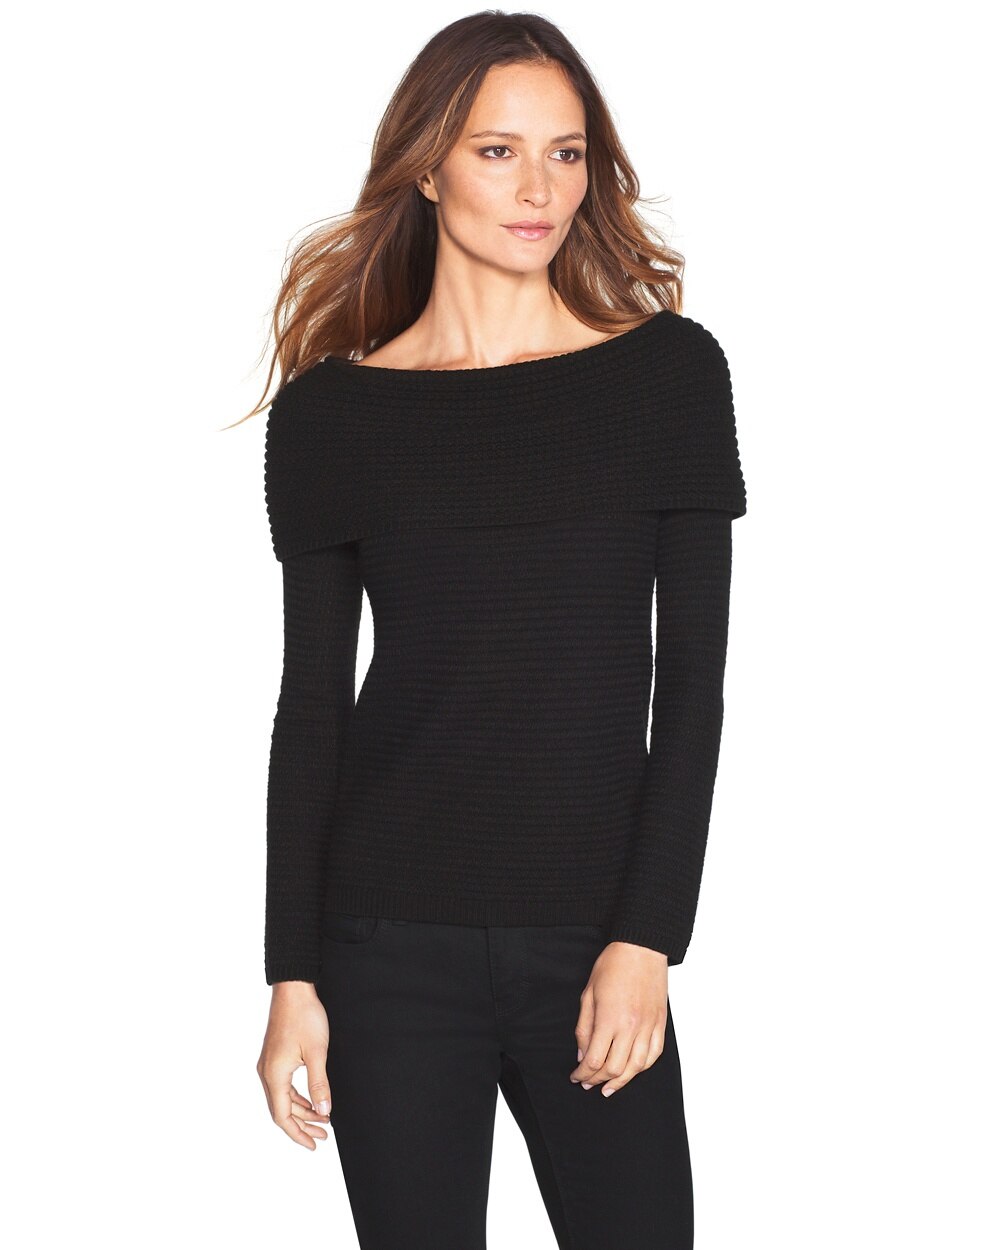 Shoulder Sweater - White House Black Market